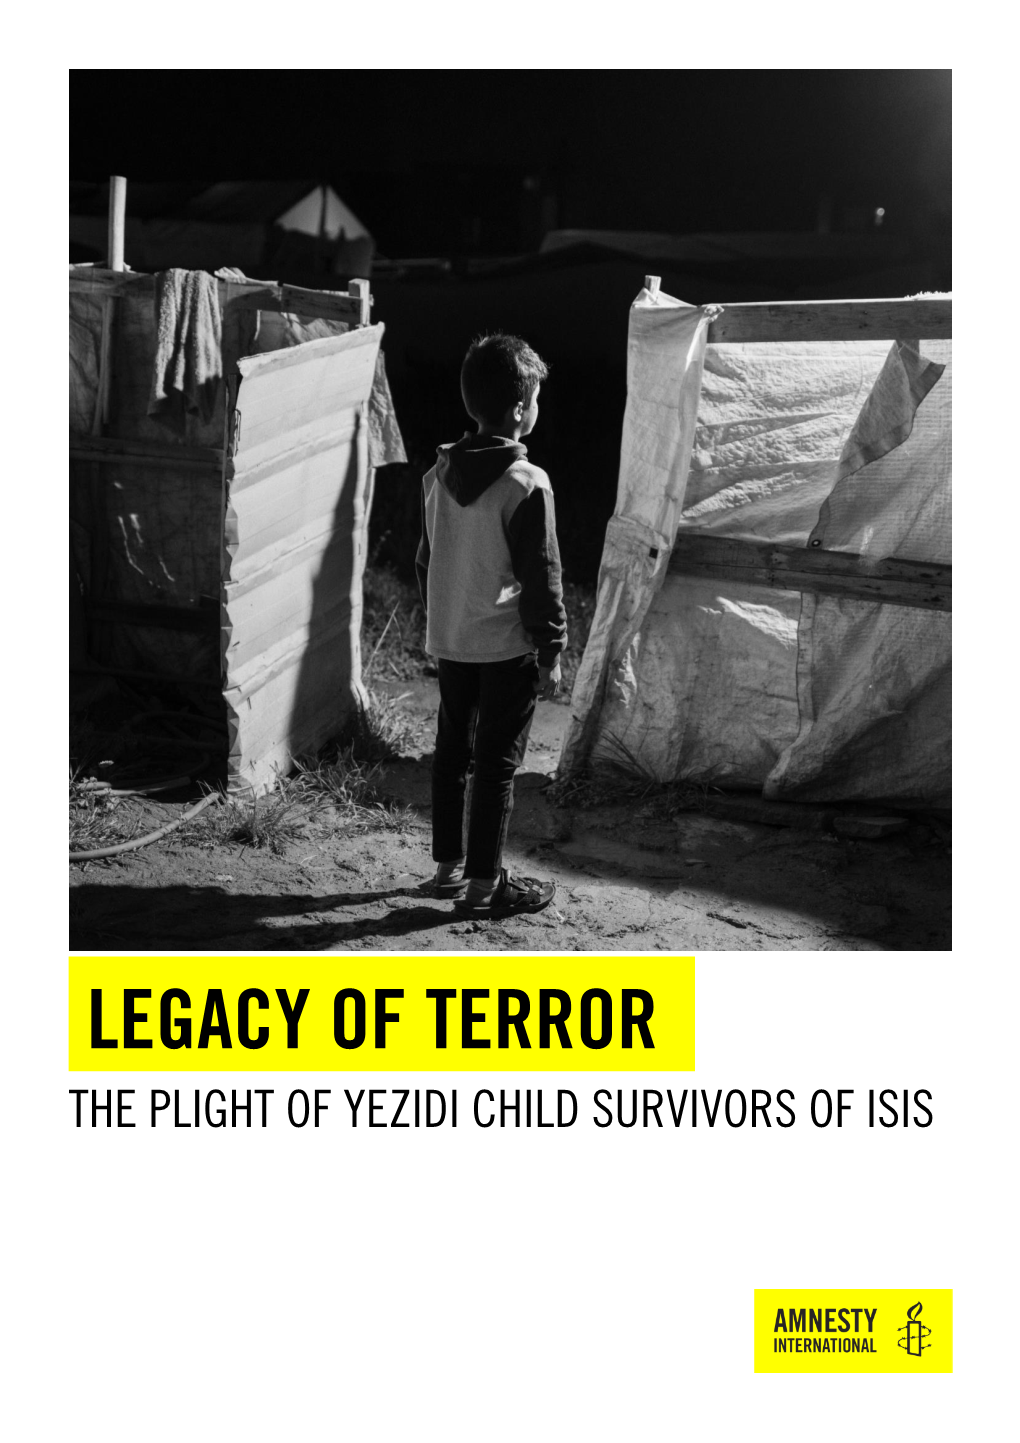 Iraq: Legacy of Terror: the Plight of Yezidi Child Survivors of ISIS